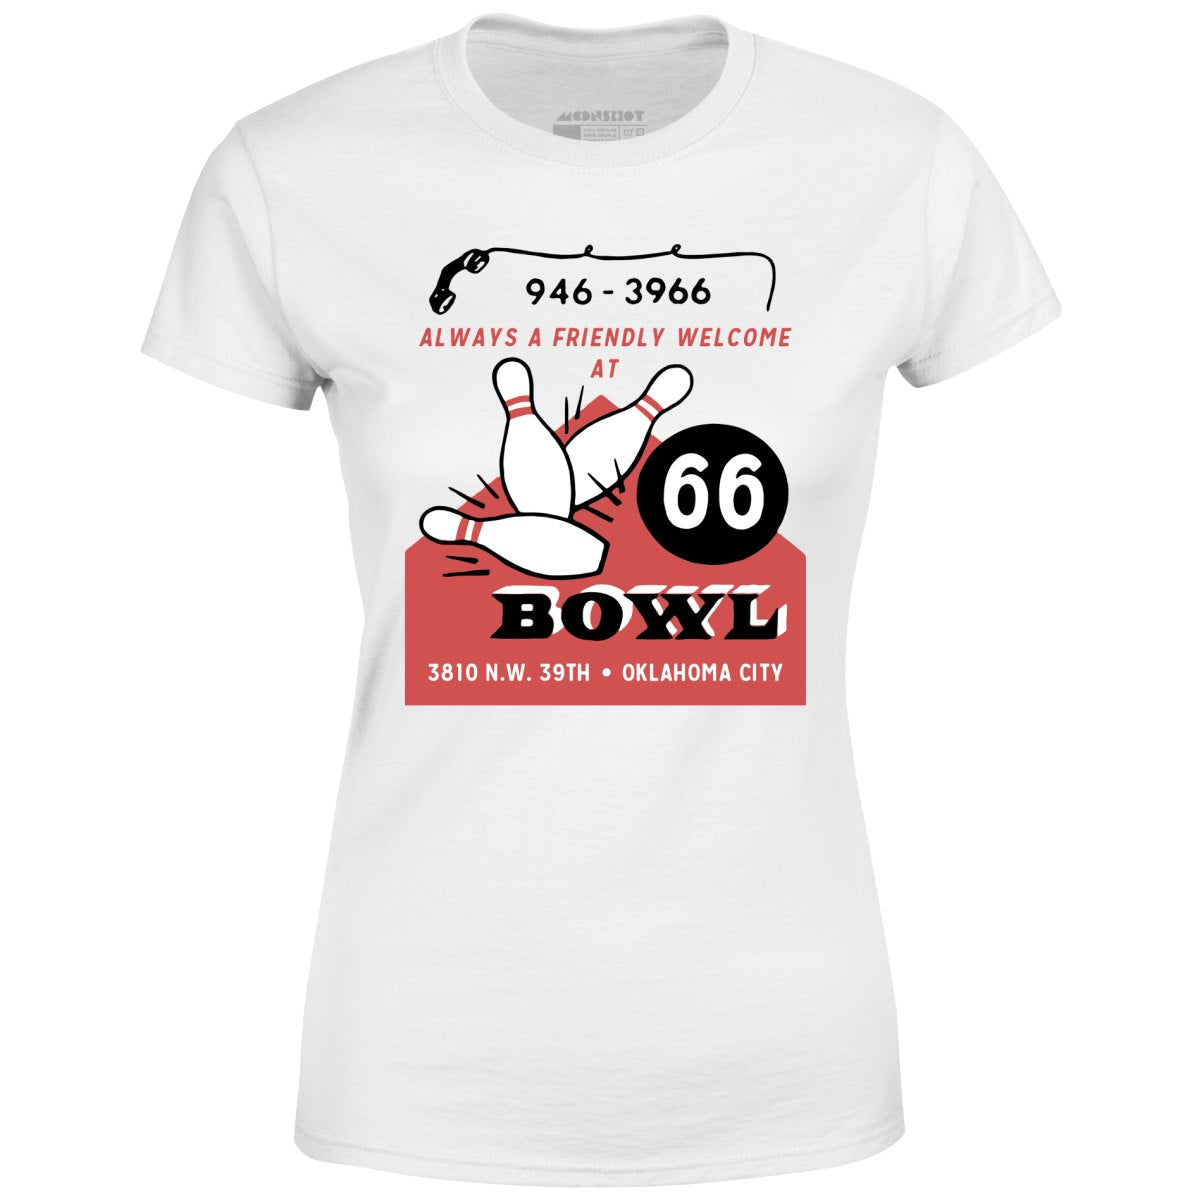 66 Bowl - Oklahoma City, OK - Vintage Bowling Alley - Women's T-Shirt